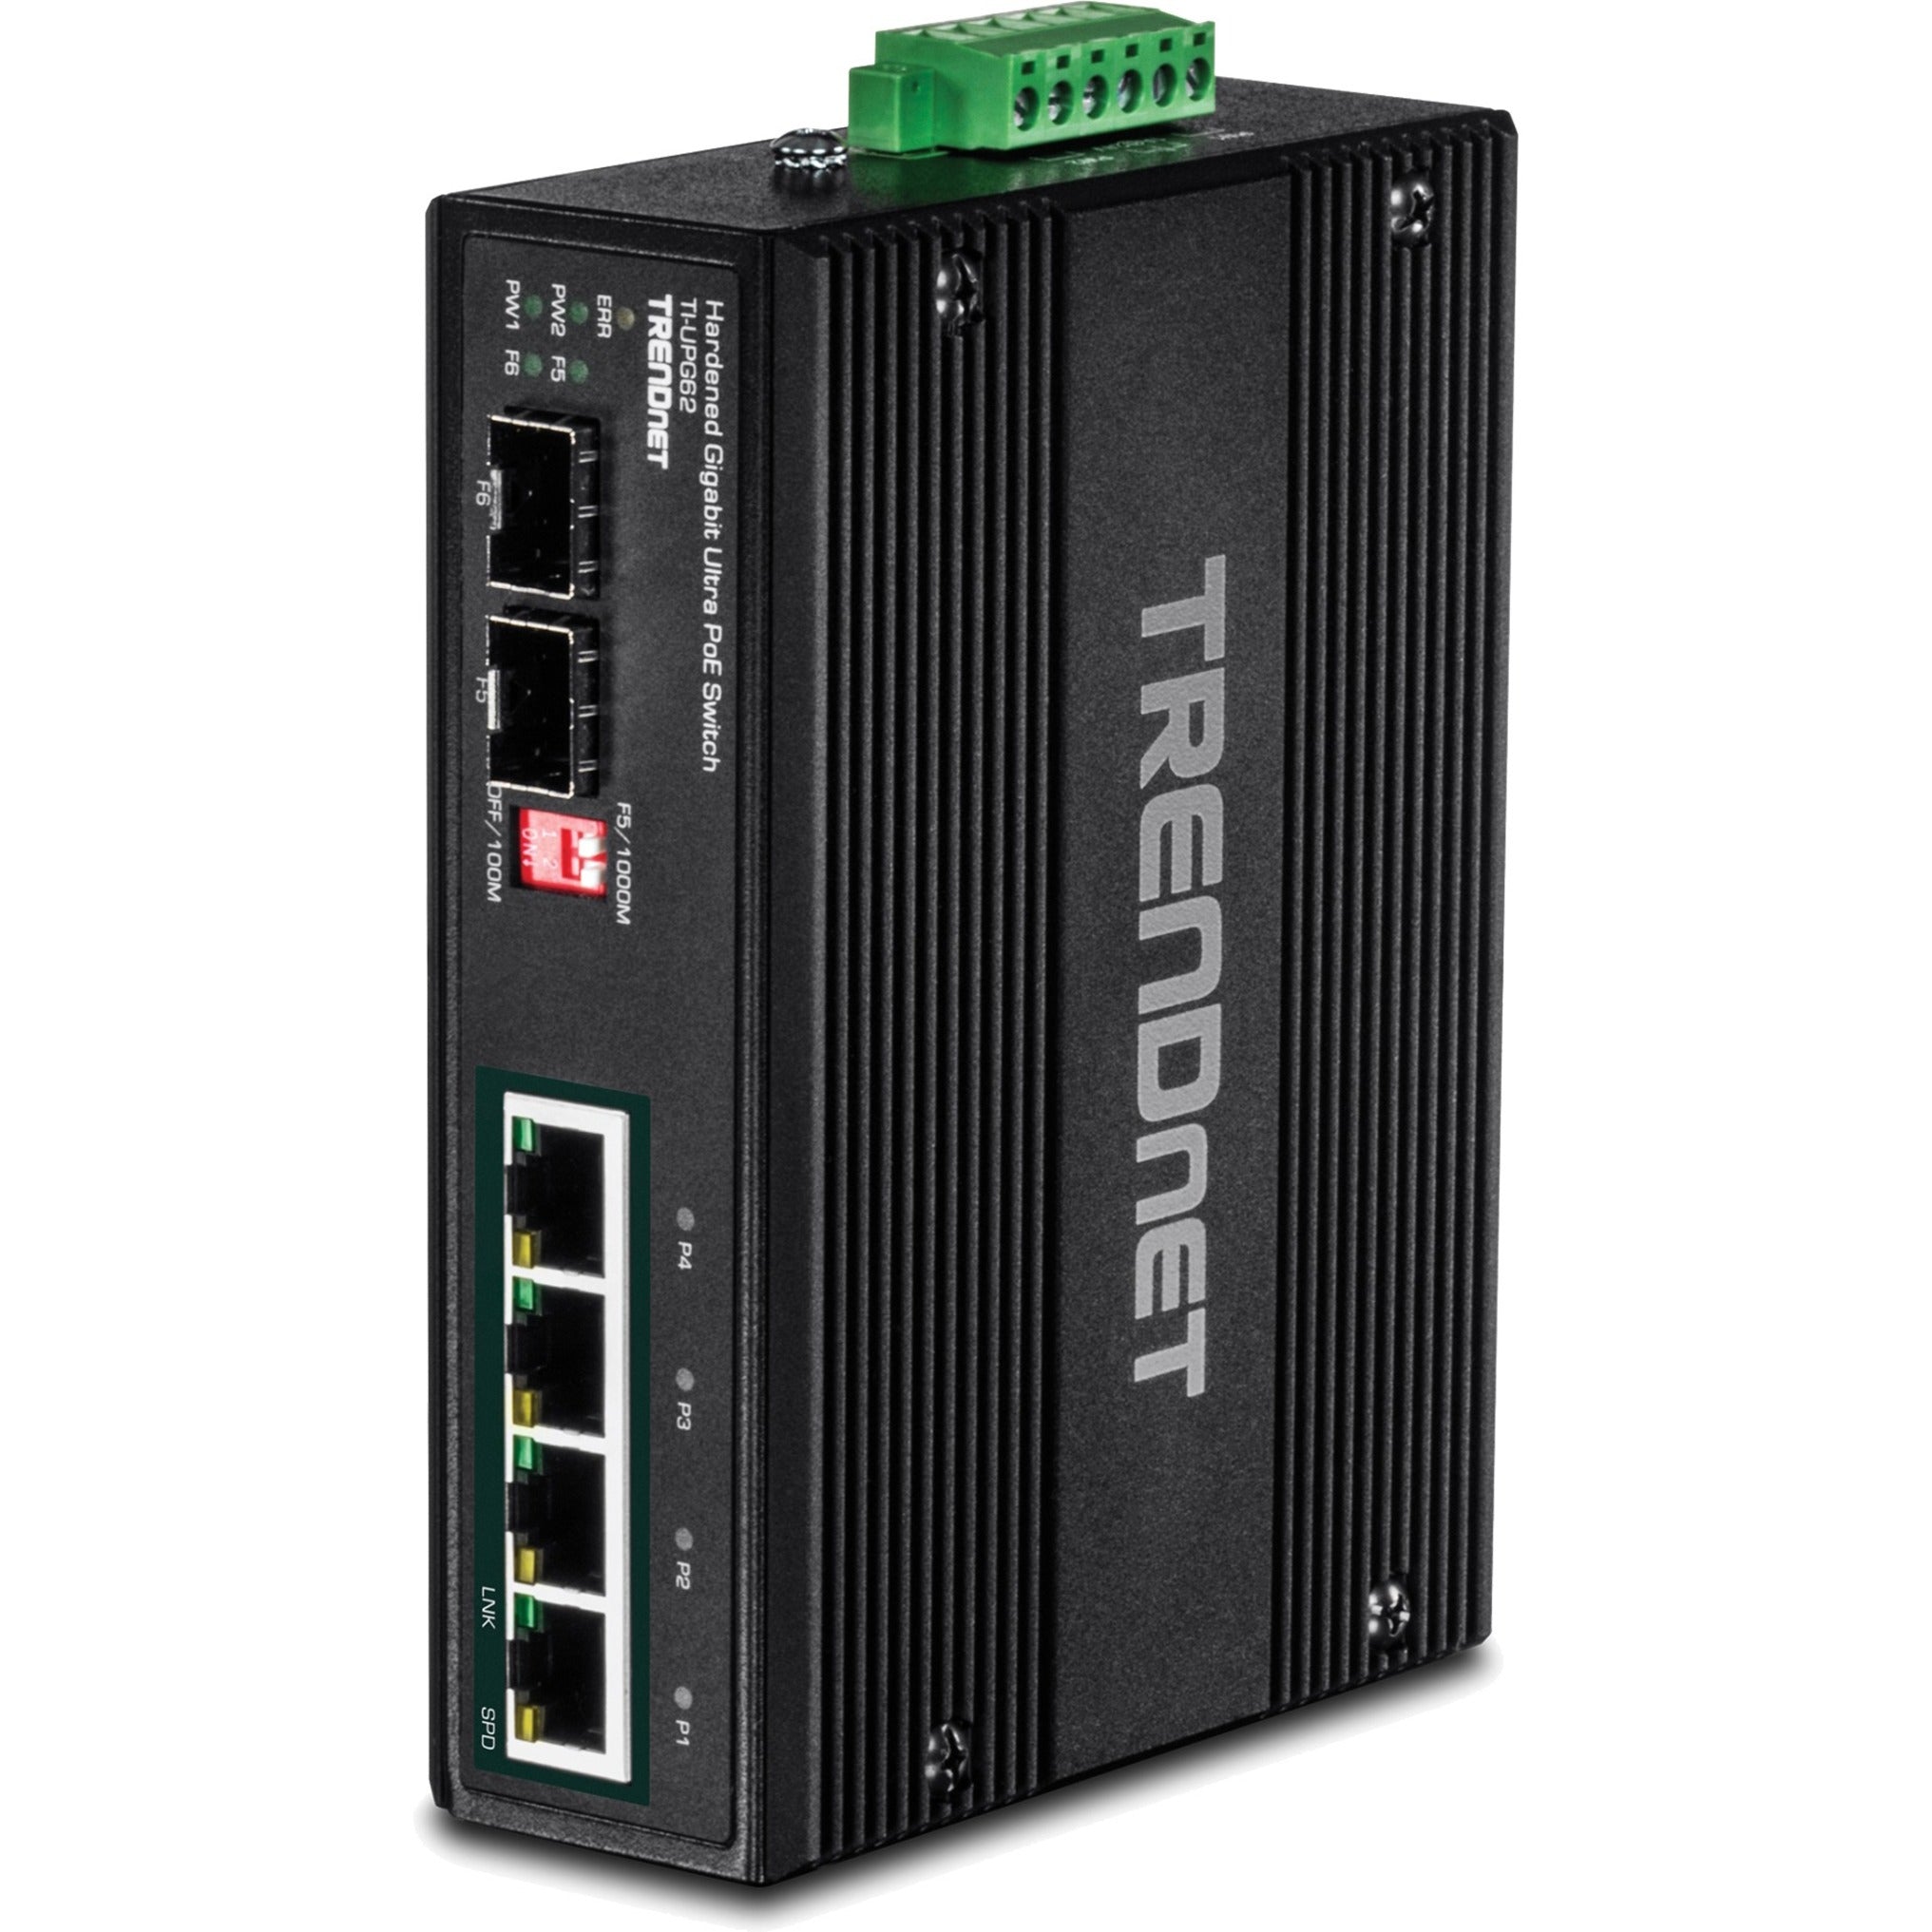 TRENDnet TI-UPG62 6-Port Hardened Industrial Gigabit Ultra PoE DIN-Rail Switch, Rugged Housing, 240W Power Budget